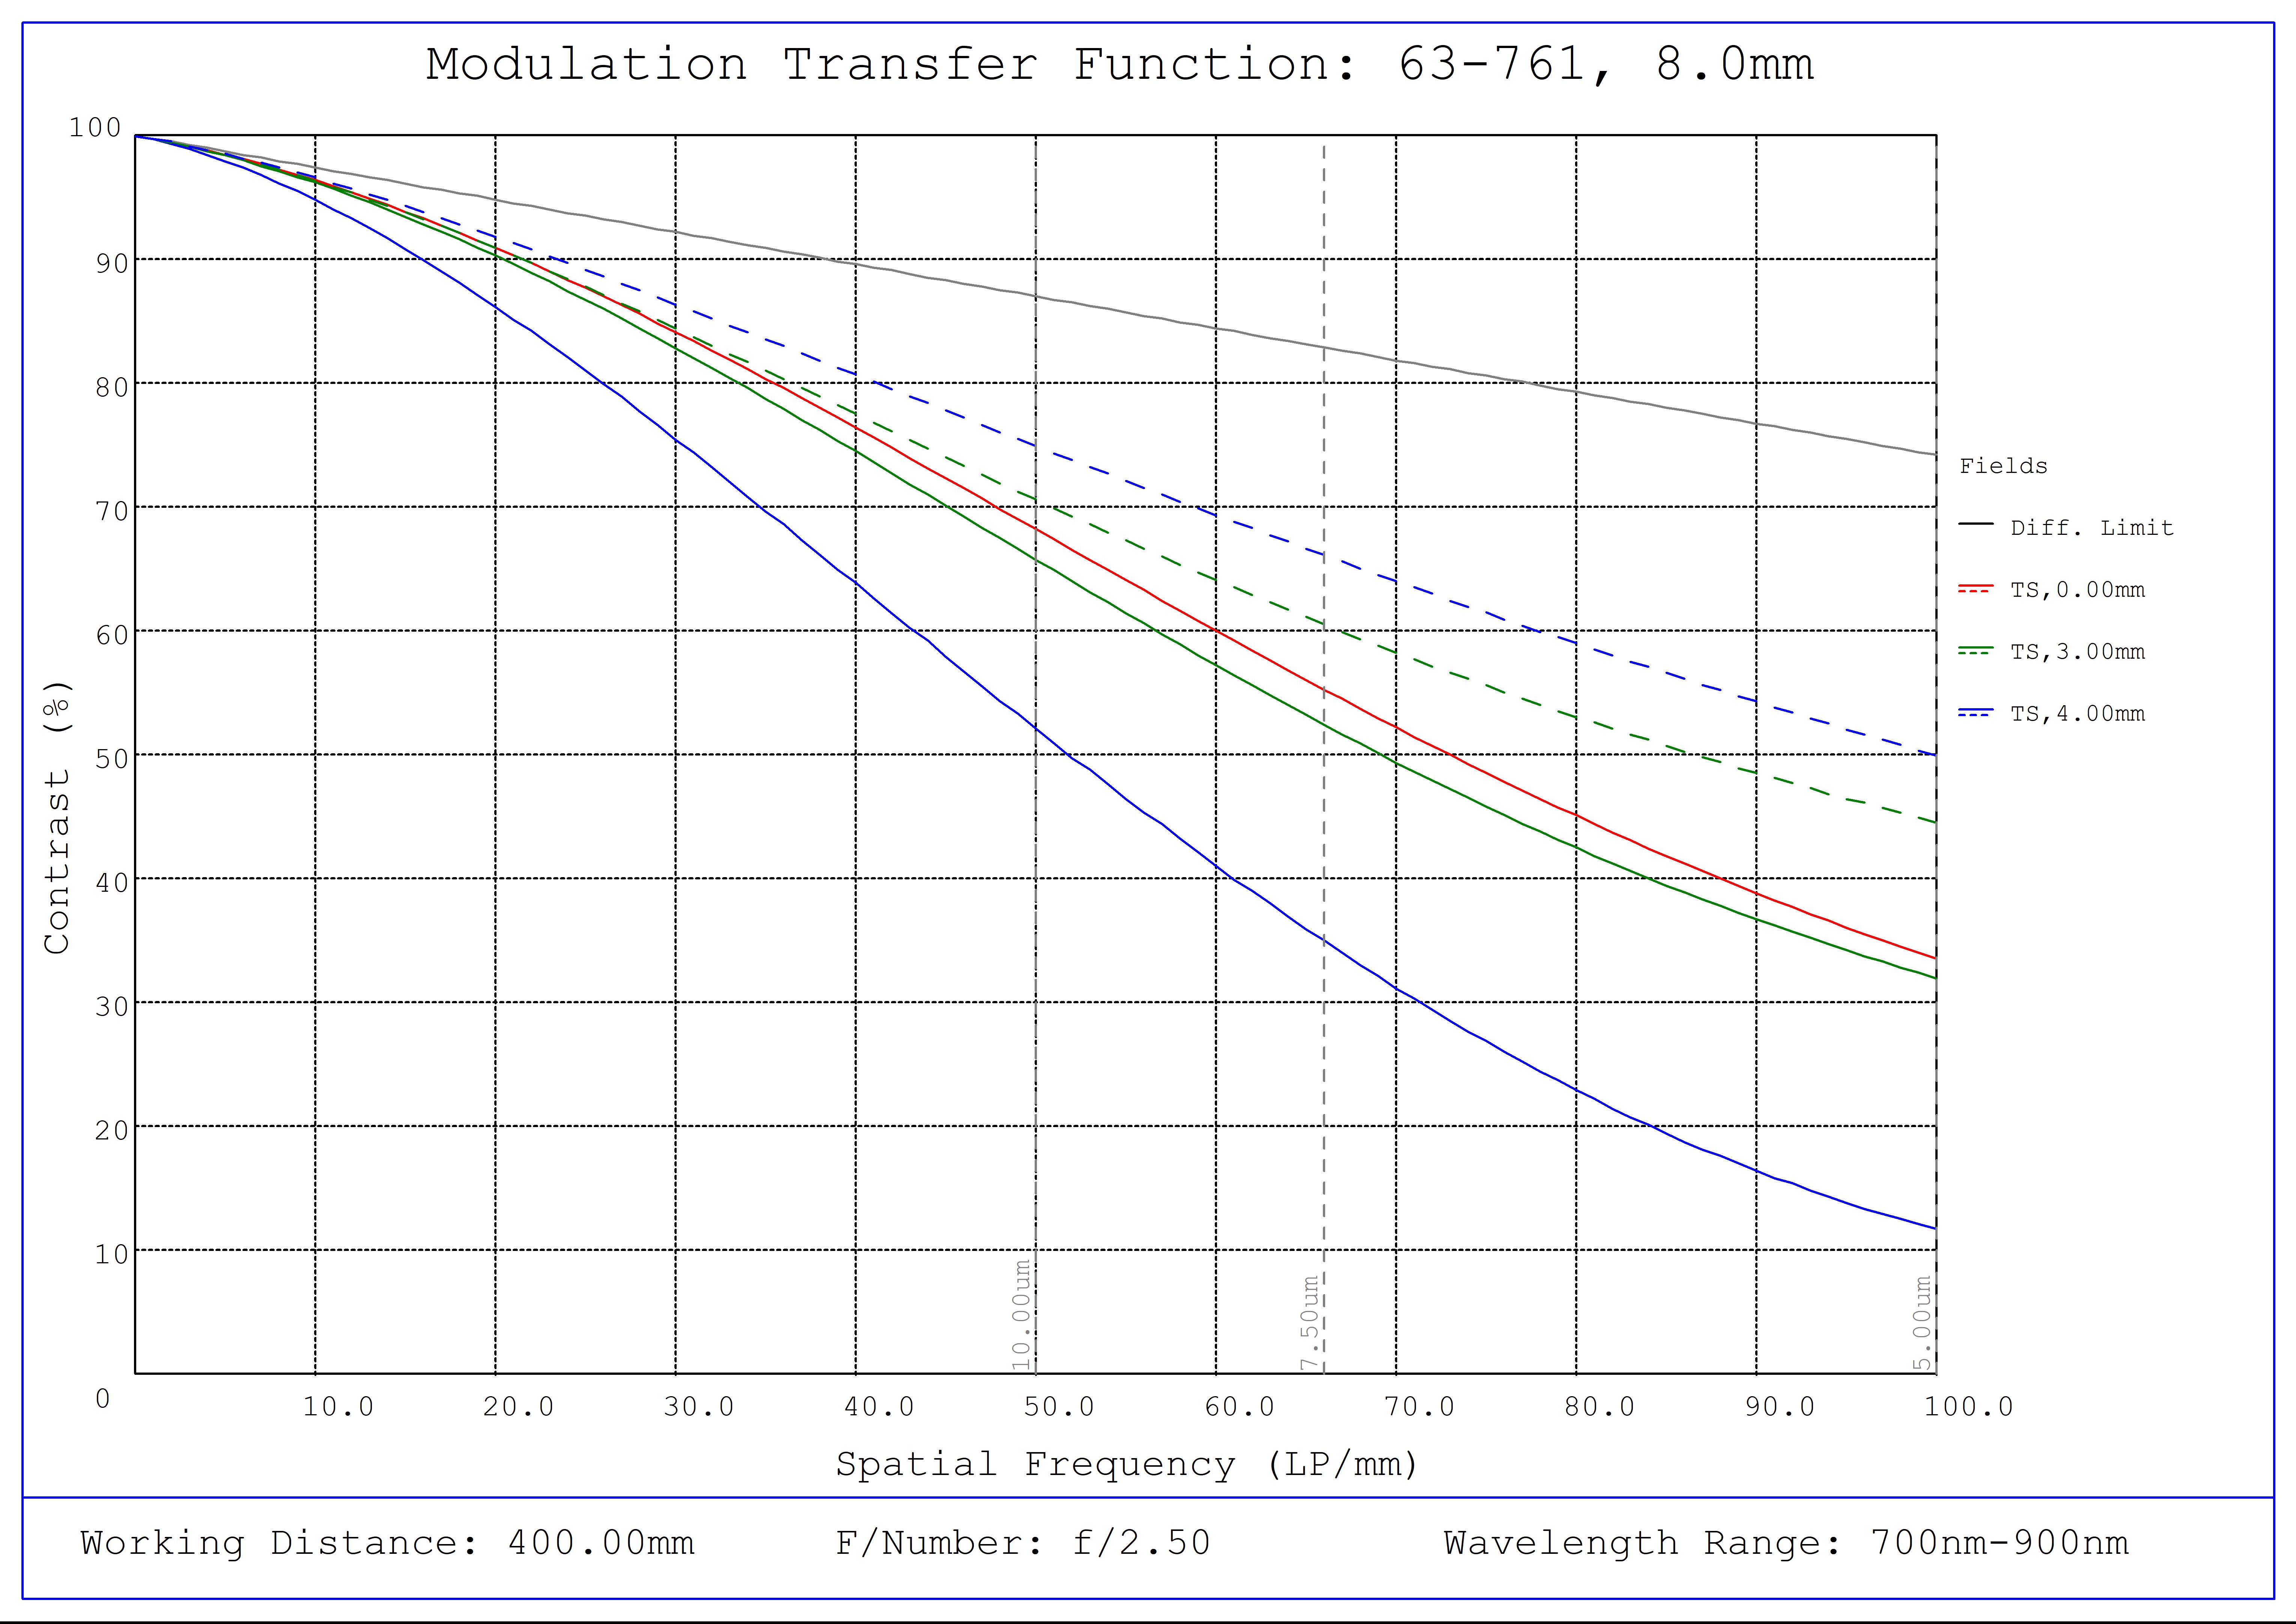 #63-761, f/2.5, NIR, 8.0mm HEO Series M12 Lens, Modulated Transfer Function (MTF) Plot, 400mm Working Distance, f2.5